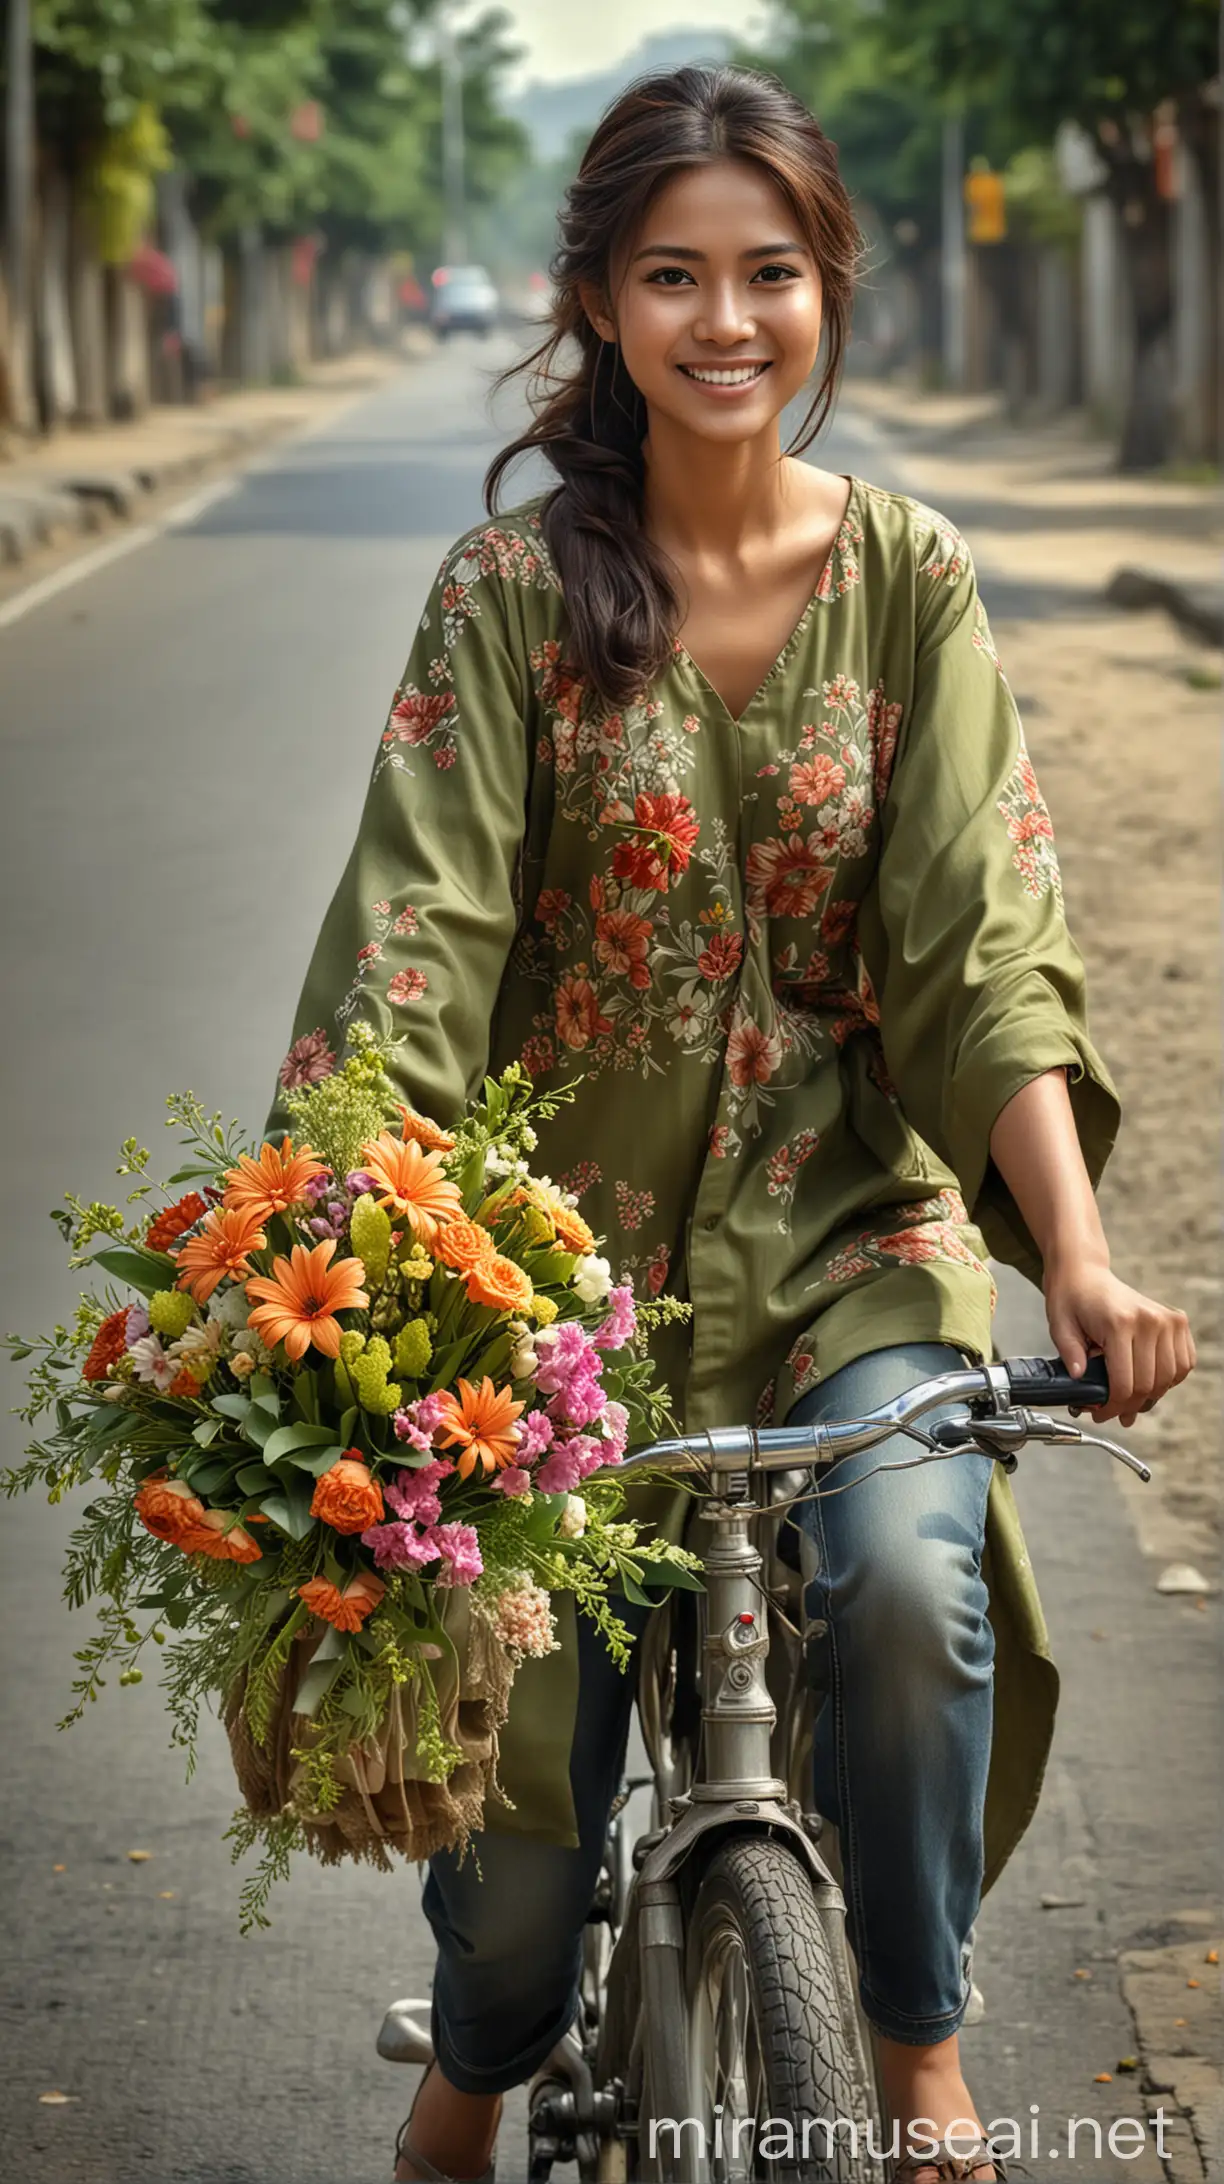 Wanita Indonesia nan cantik tersenyum manis  sedang menaiki sepeda dengan buket bunga didepannya, gaya rambut dikucir kuda, mengenakan kaos hijau tosca dan celana jeans panjang, ditengah jalan pedesaaan, realistis ultra HDR extreme original face 